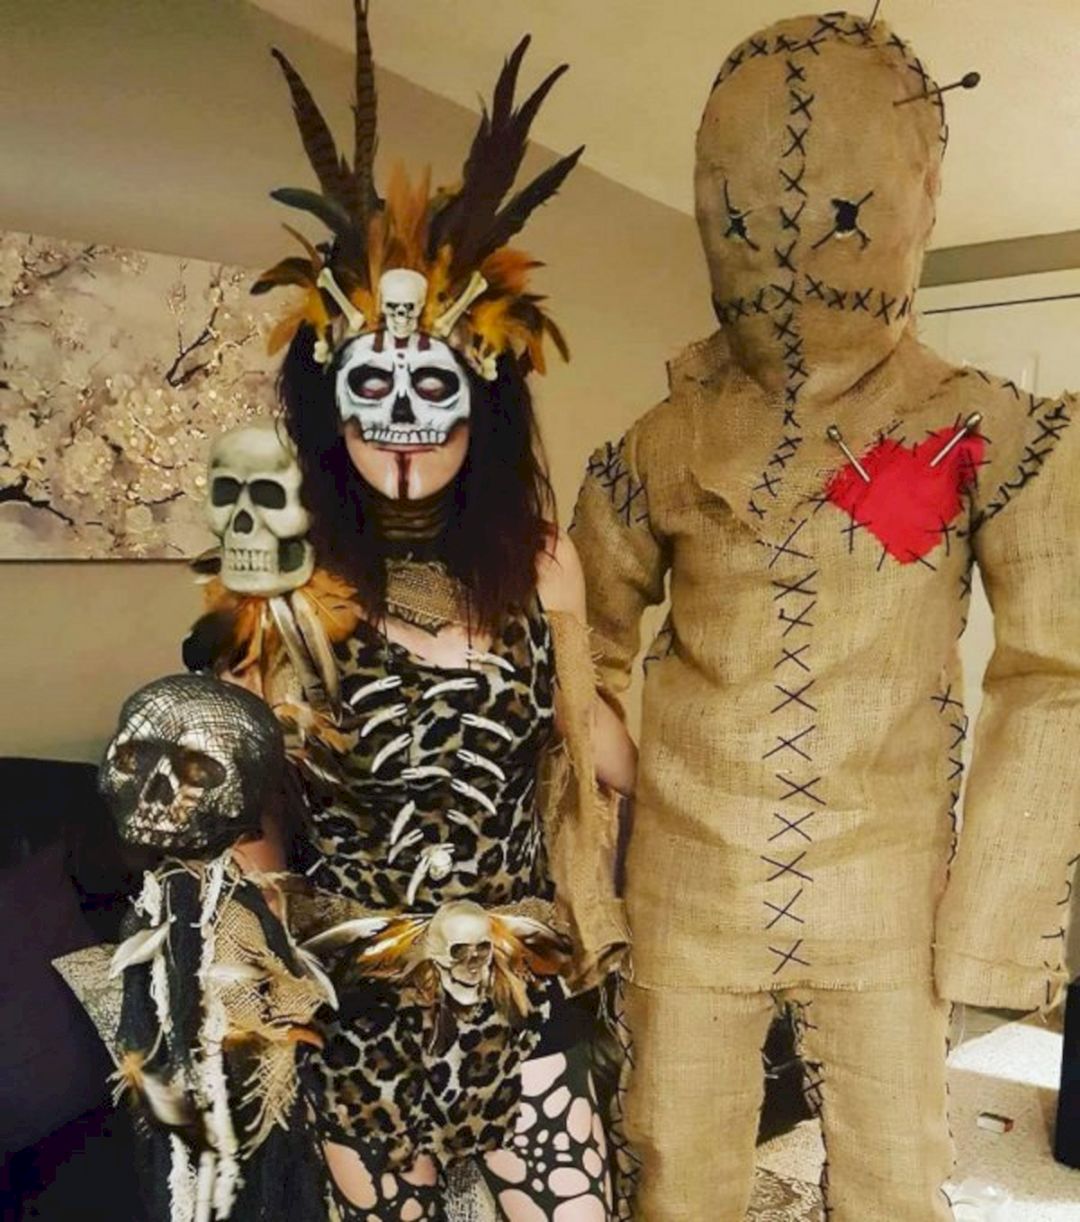 Weird voodoo with doll halloween couple costume idea from blurmark